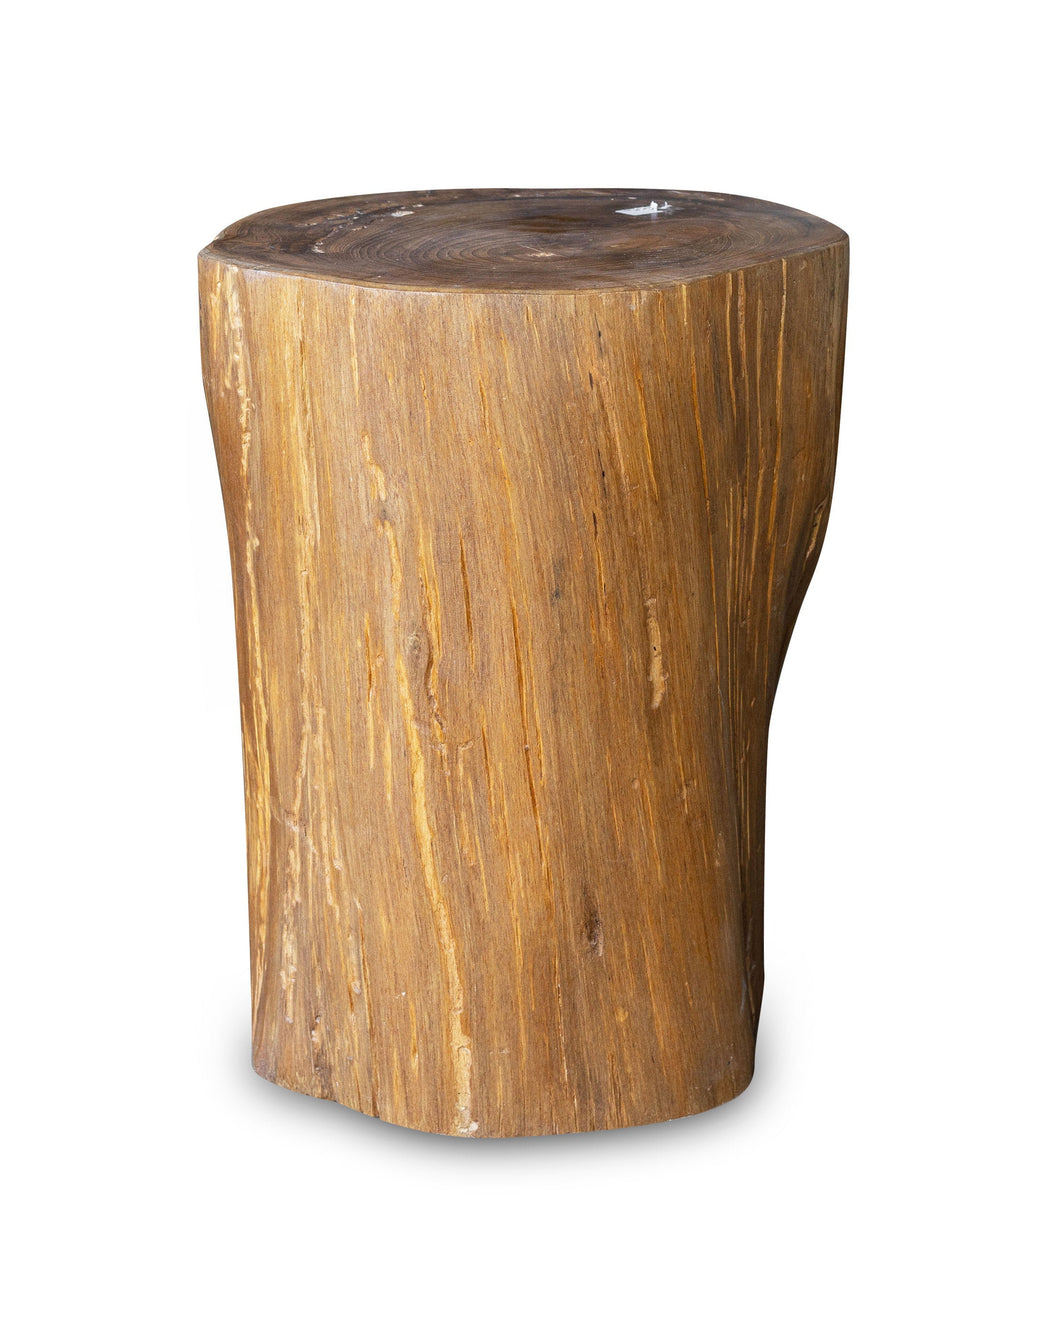 Solid Teak Wood Side Table, Natural Tree Stump Stool or End Table #20    17.75